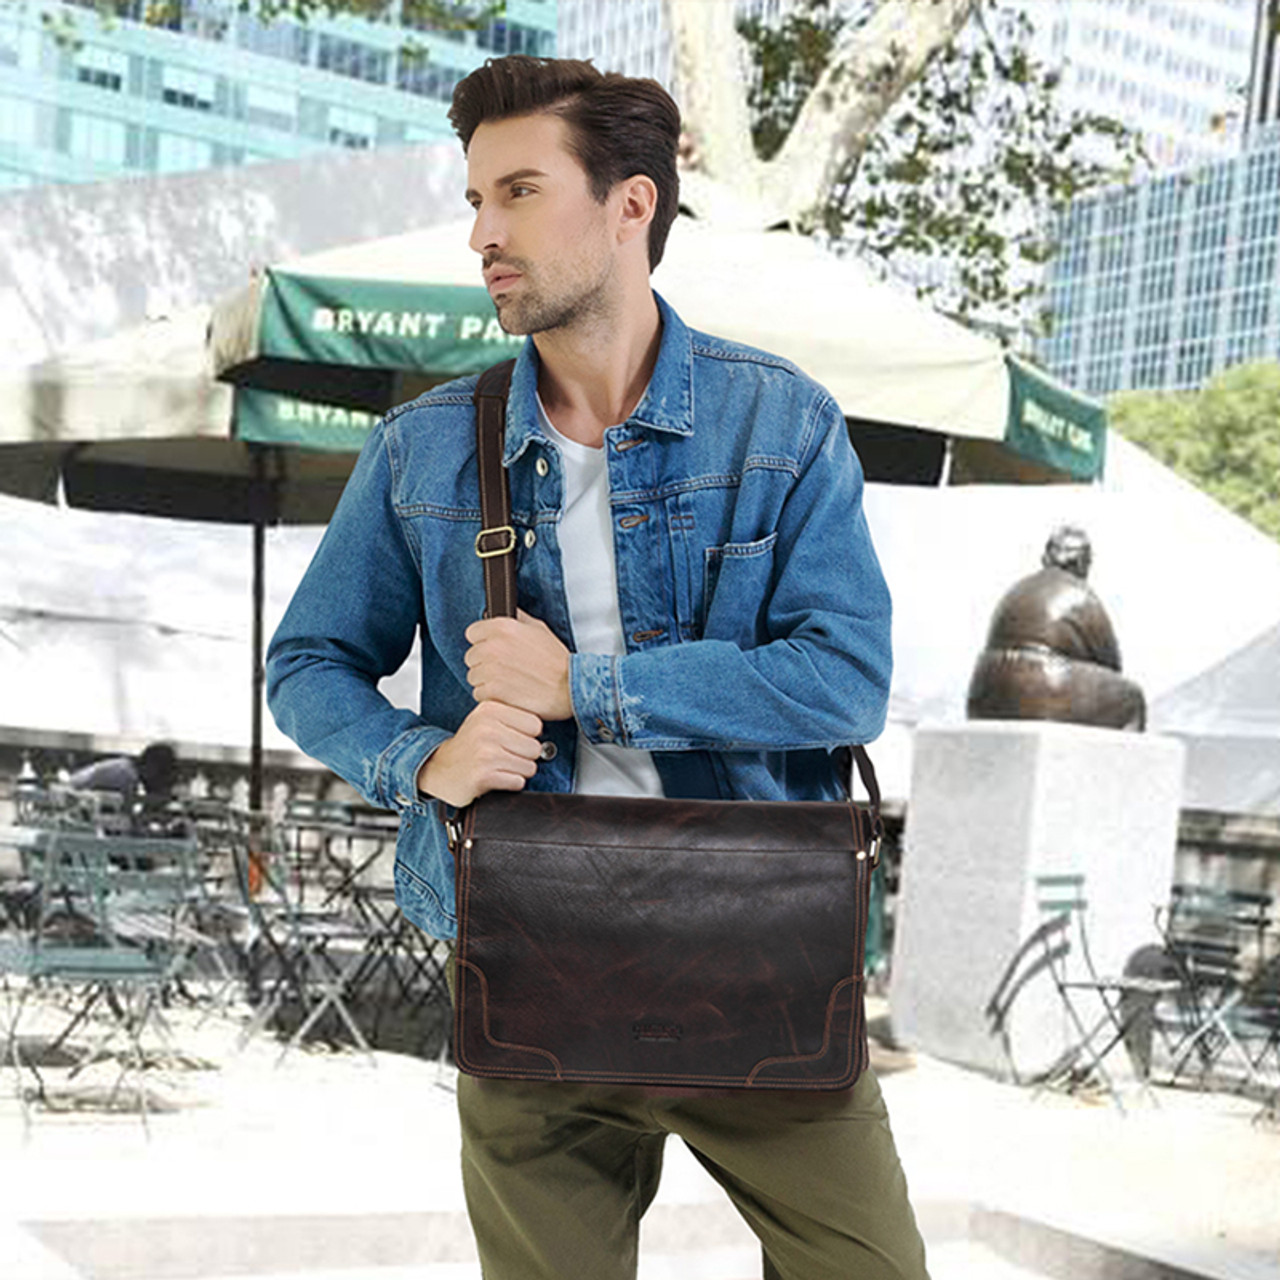 CONTACT'S Casual Shoulder Crossbody bag Genuine Leather Men's Briefcase  Leather Laptop Bag Male Messenger Bags Designer Bag 2017 